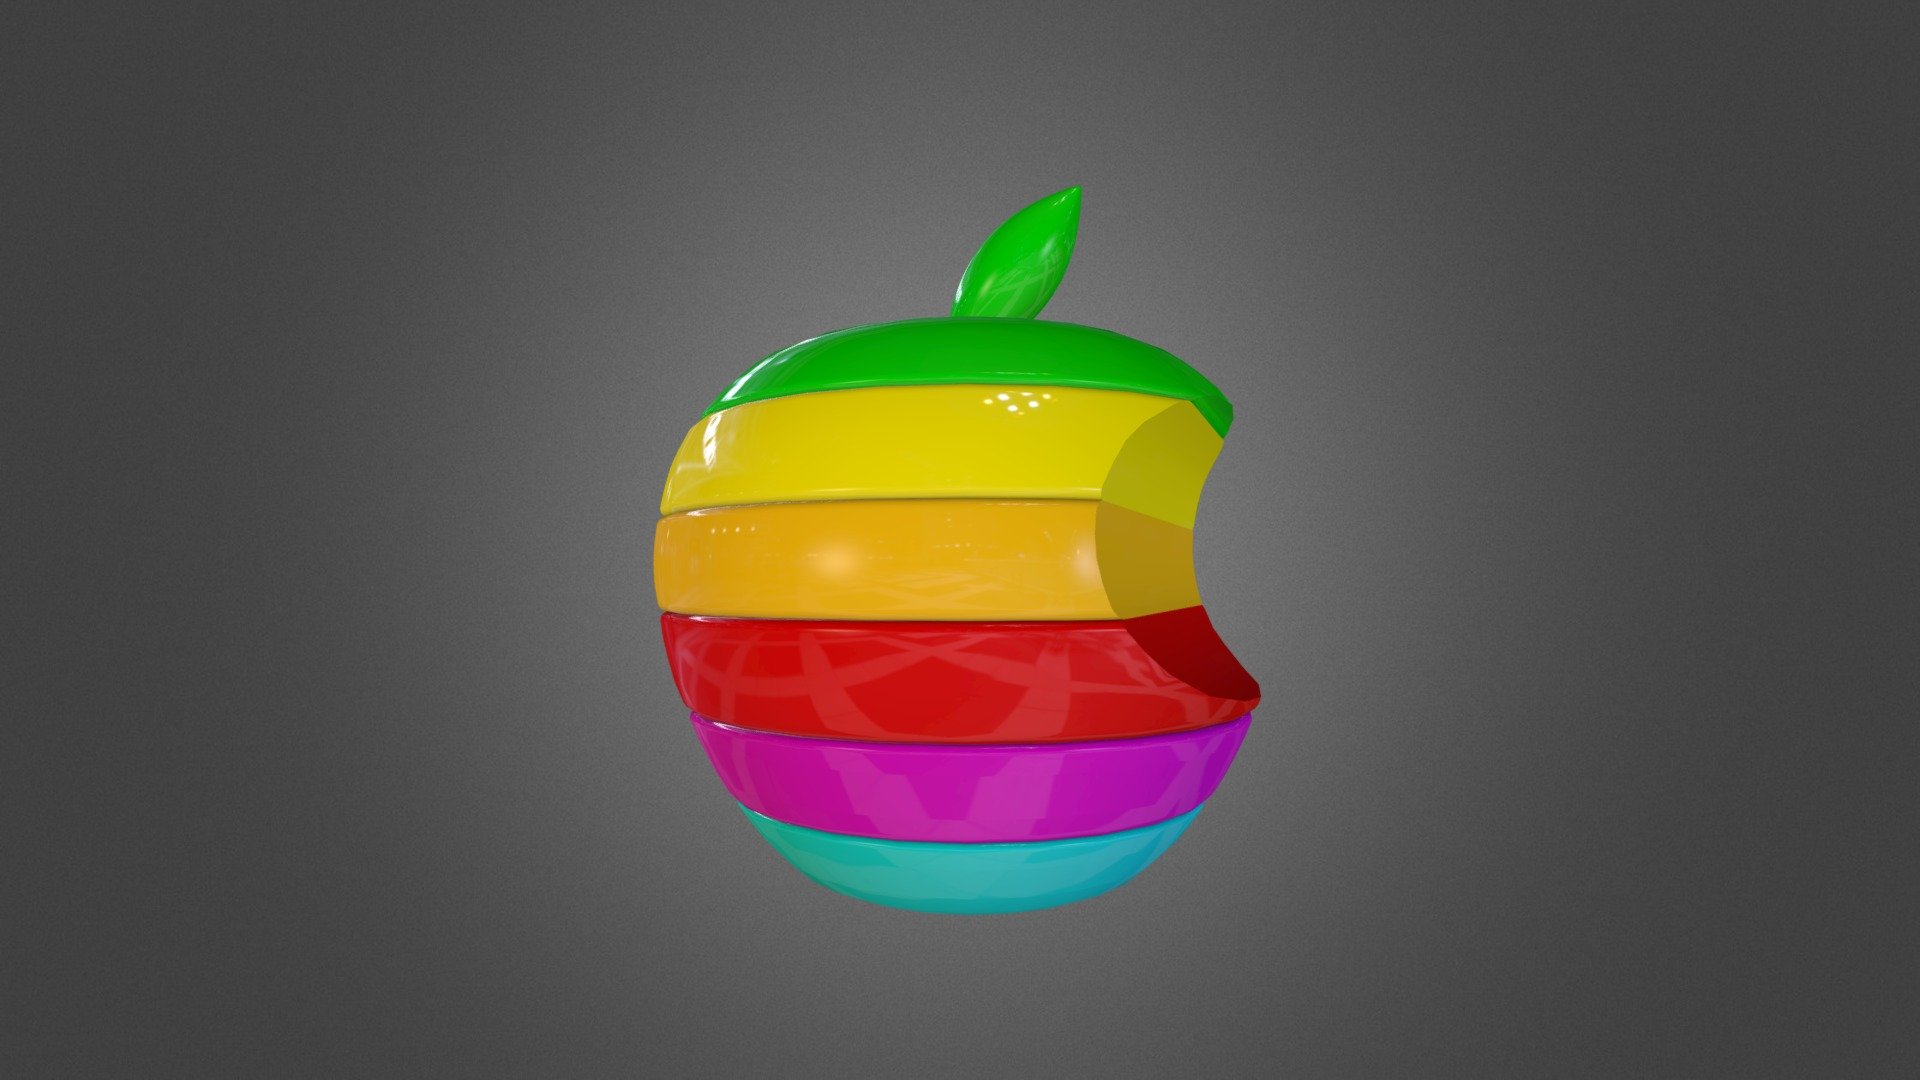 Apple - 3D model by Joshua Collins (@joshuacollinsmedia) 3d model